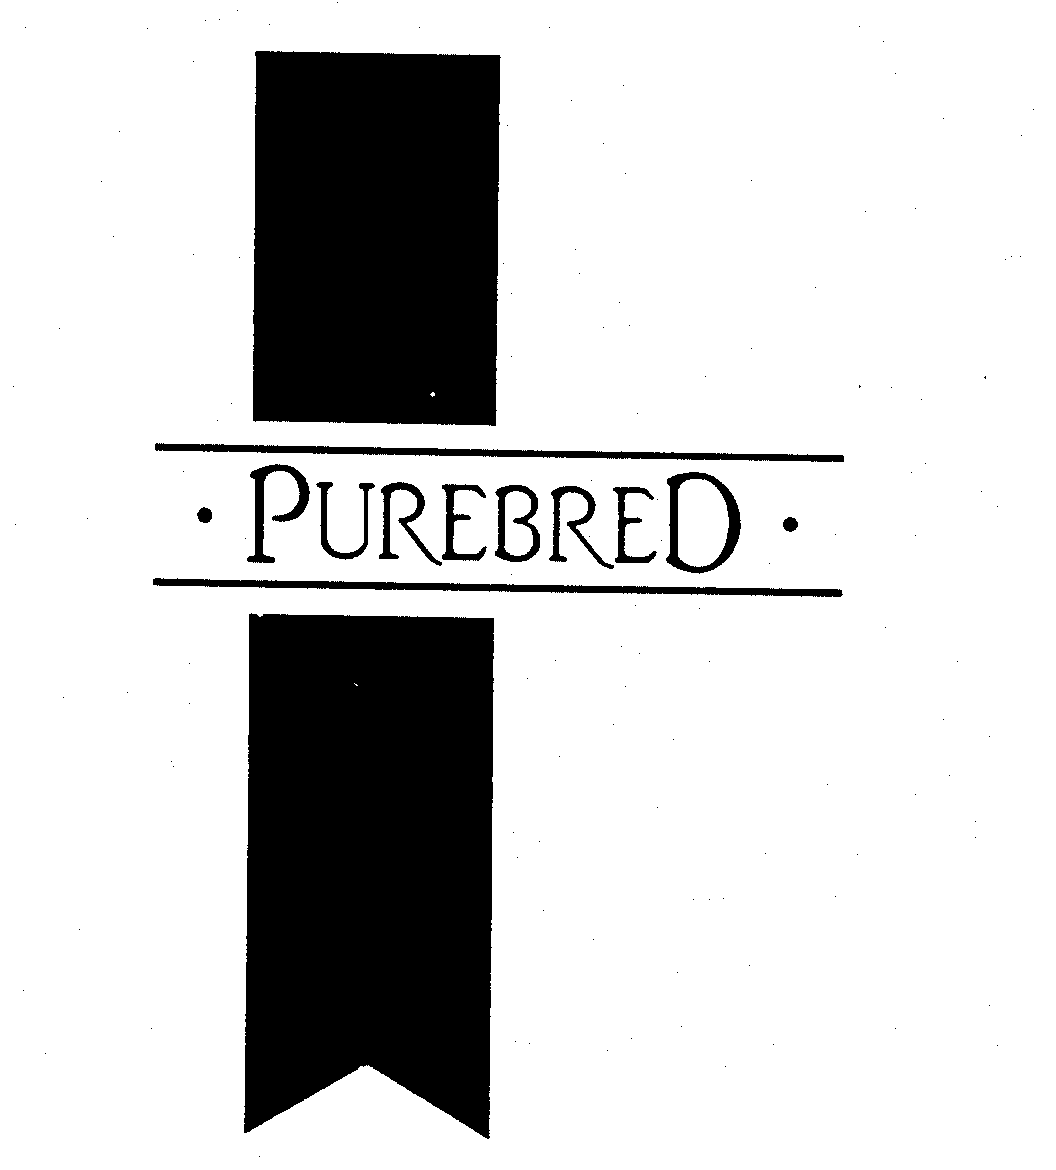 PUREBRED